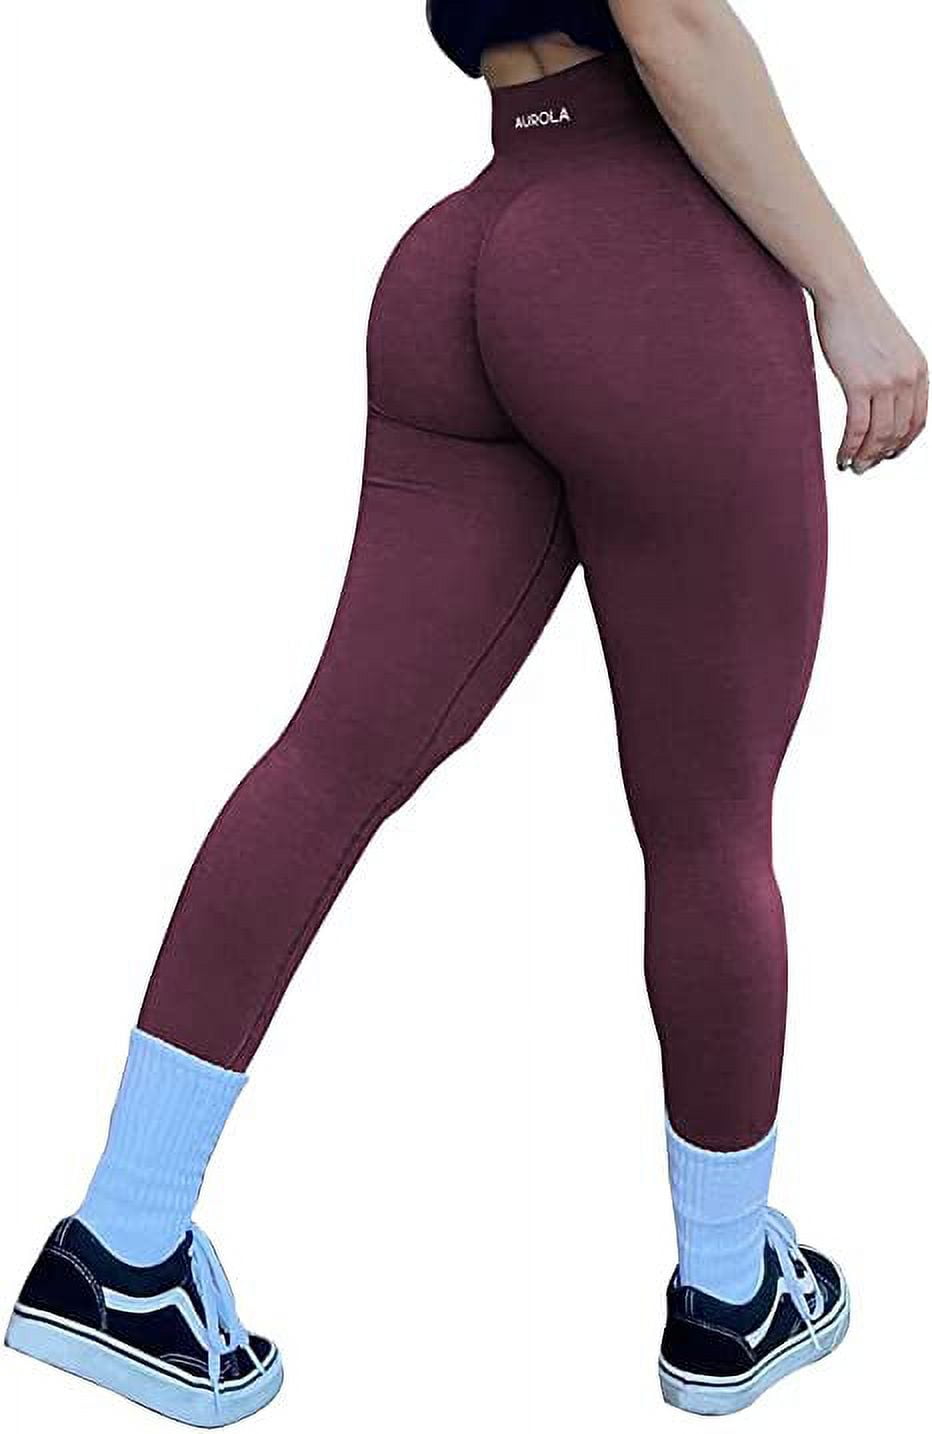  AUROLA Workout Leggings For Women Seamless Scrunch Yoga Pants  Tummy Control Gym Fitness Sport Active Leggings 25